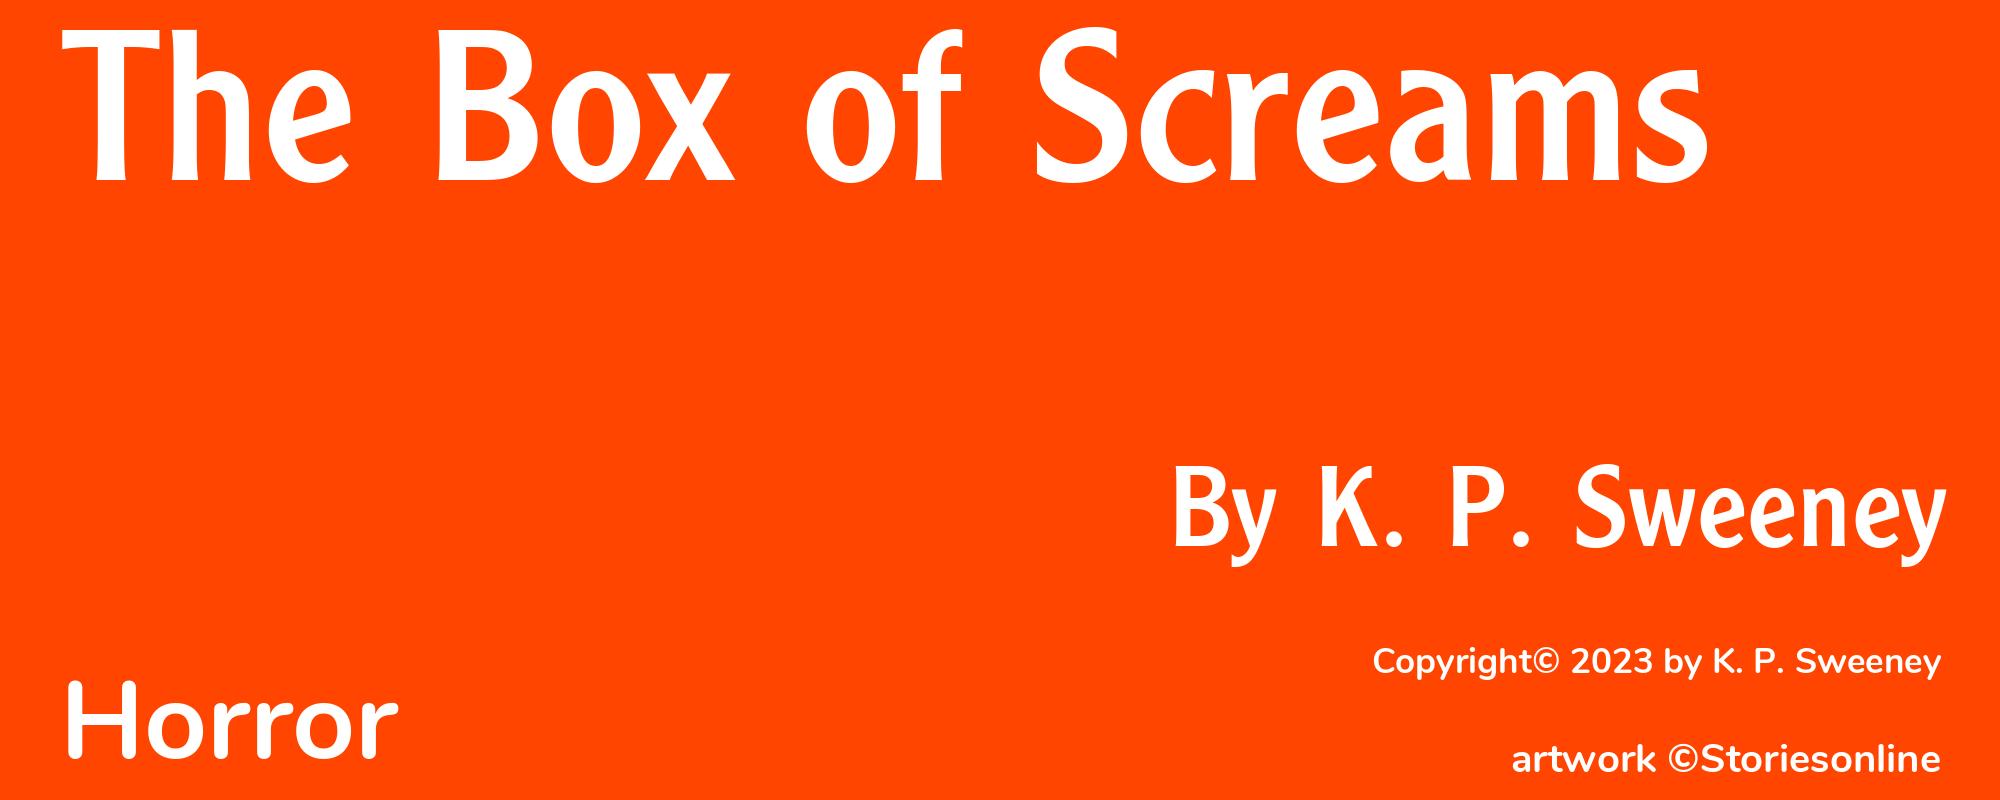 The Box of Screams - Cover